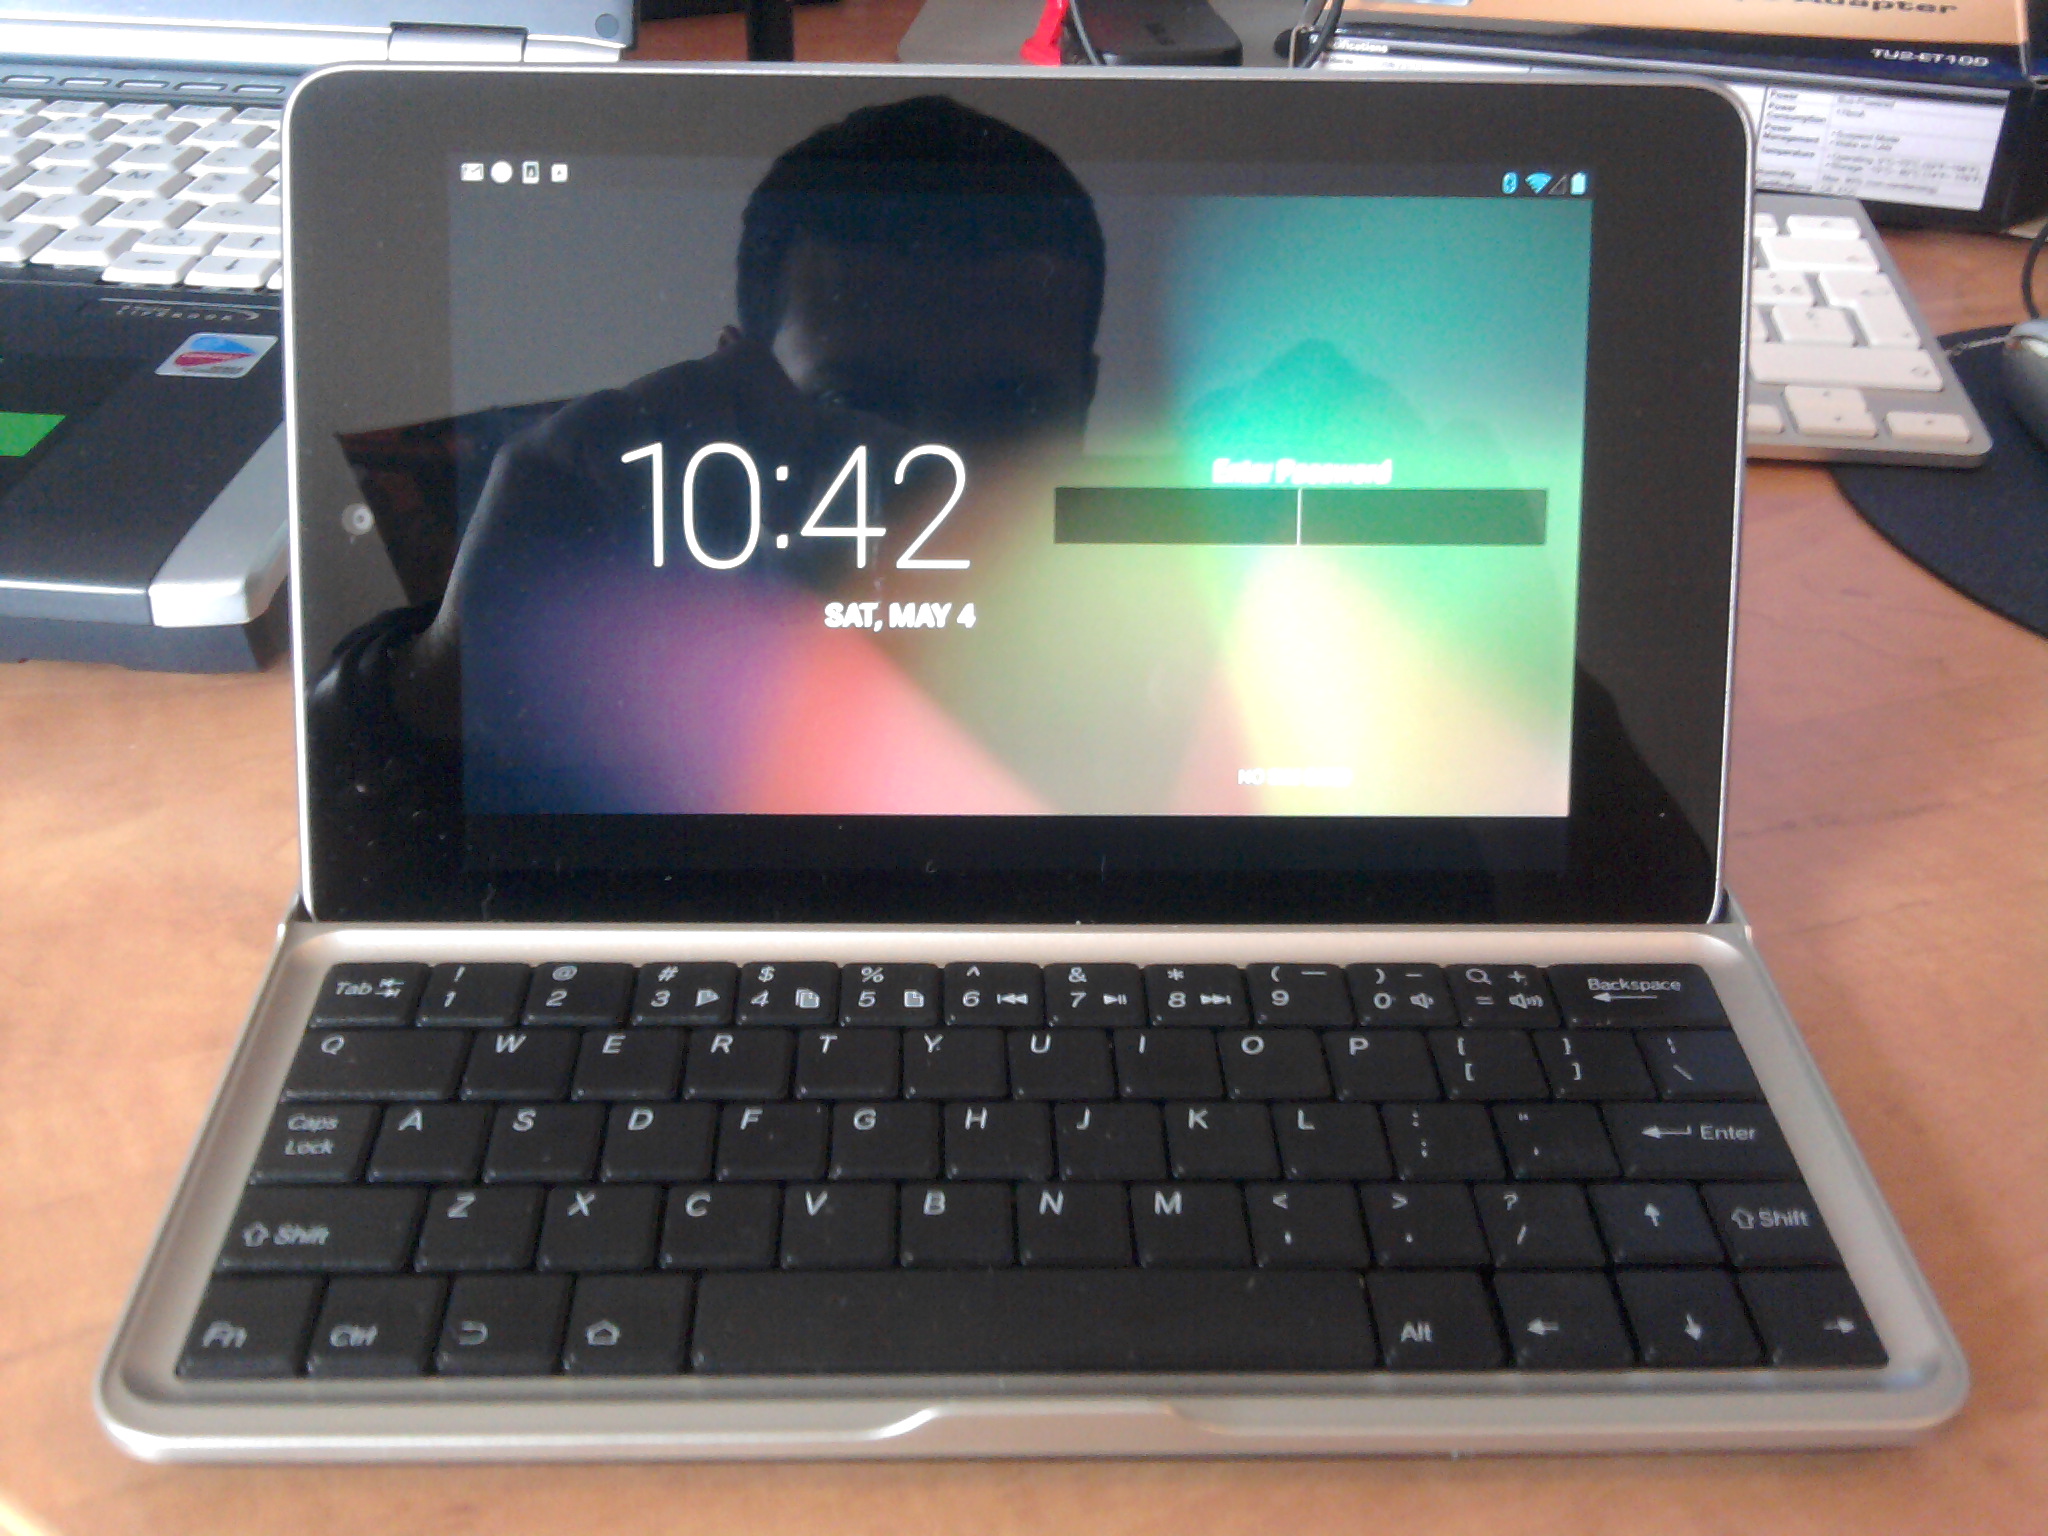 can i install kali nethunter on my nexus 7 2012 tablet